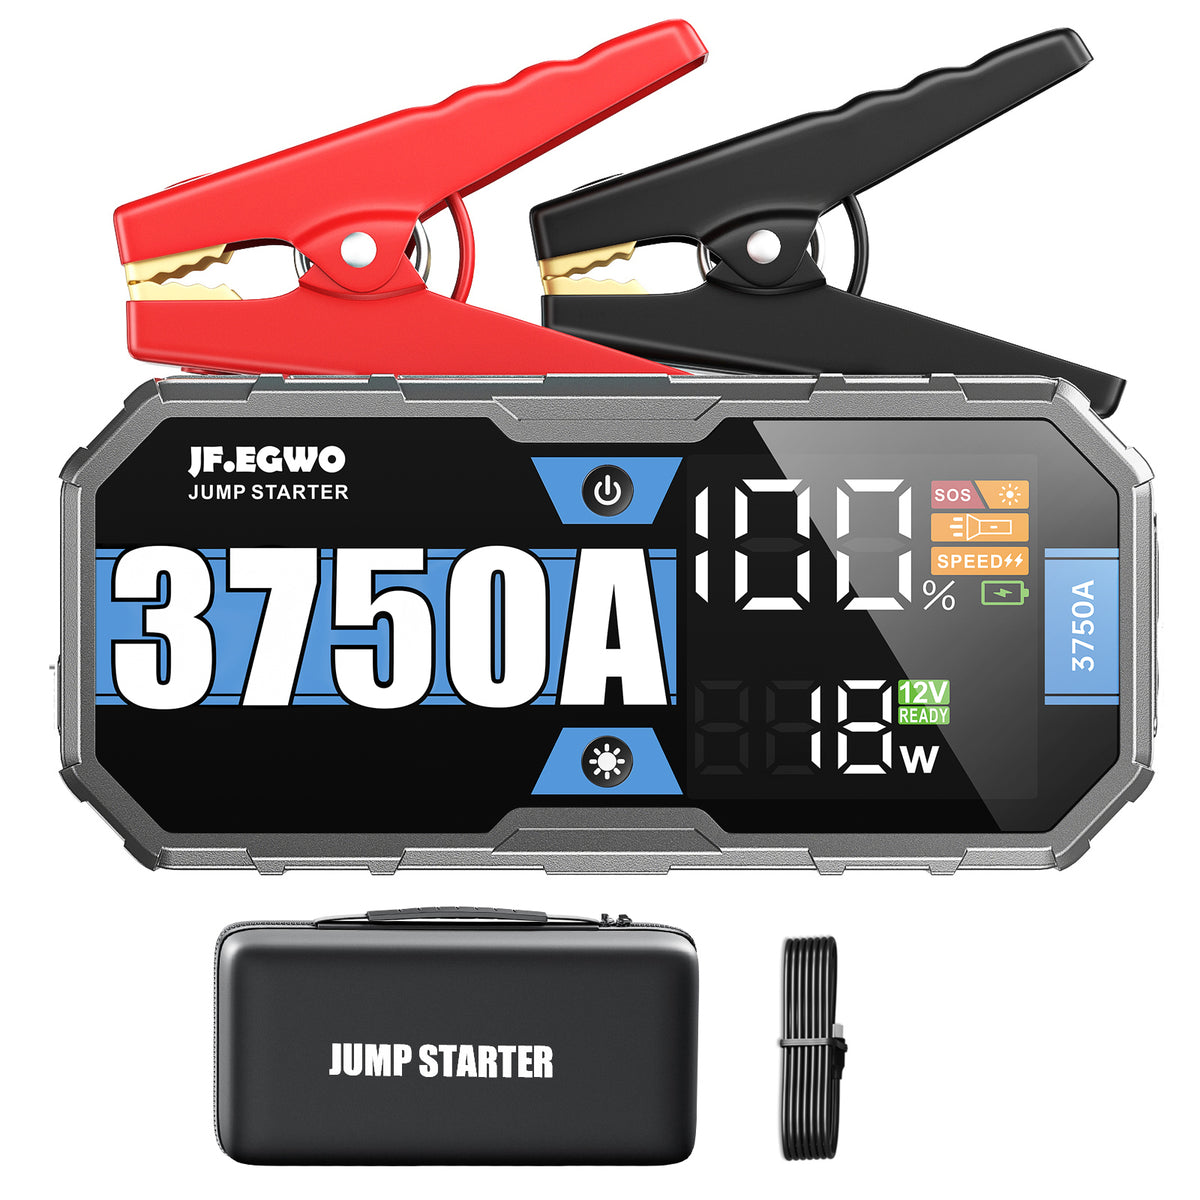 JFEGWO 3750A Starthilfe Auto Batterie Booster Power Bank